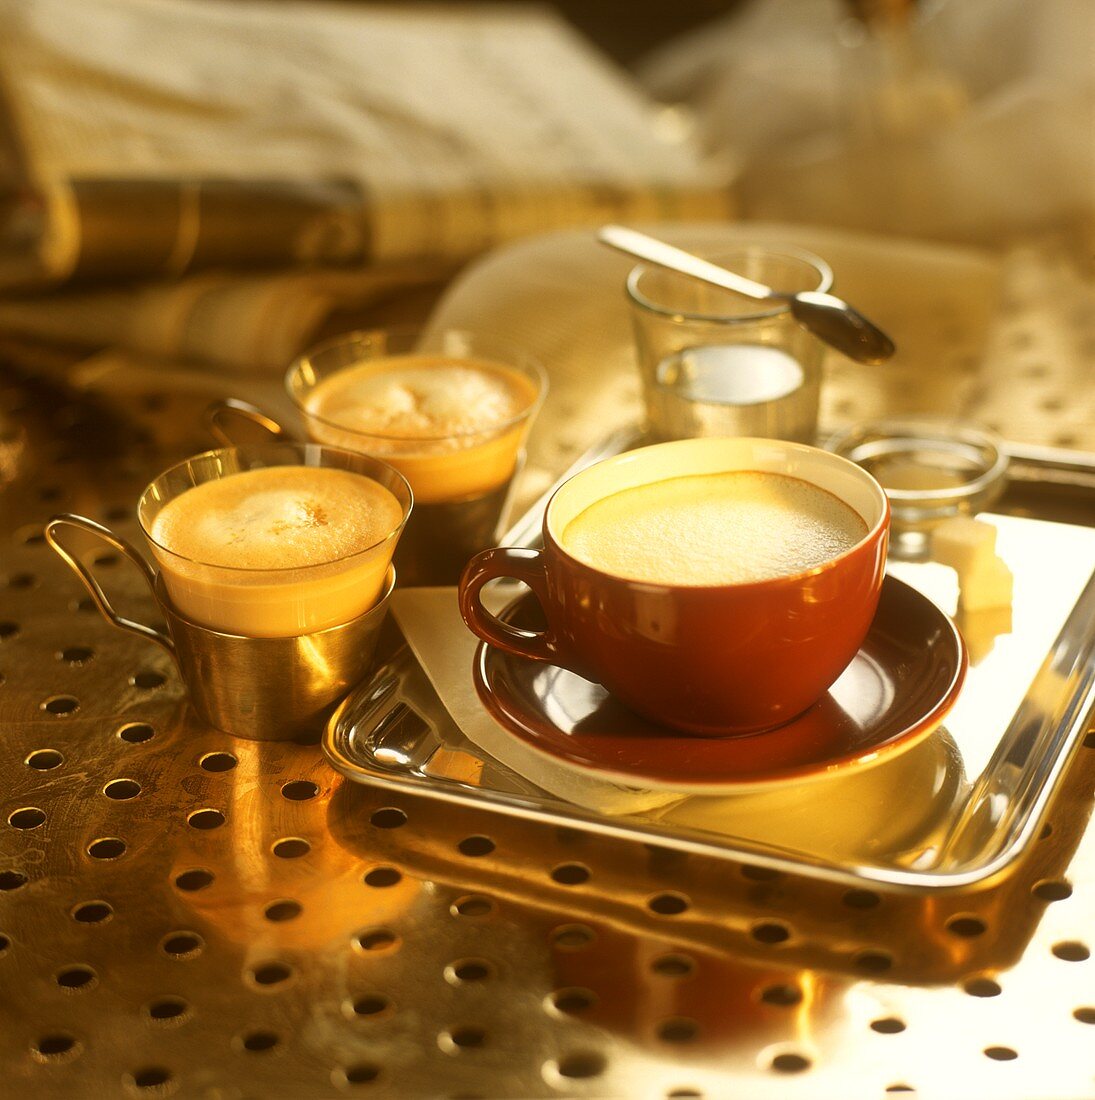 Viennese coffee specialities: Konsul and Melange